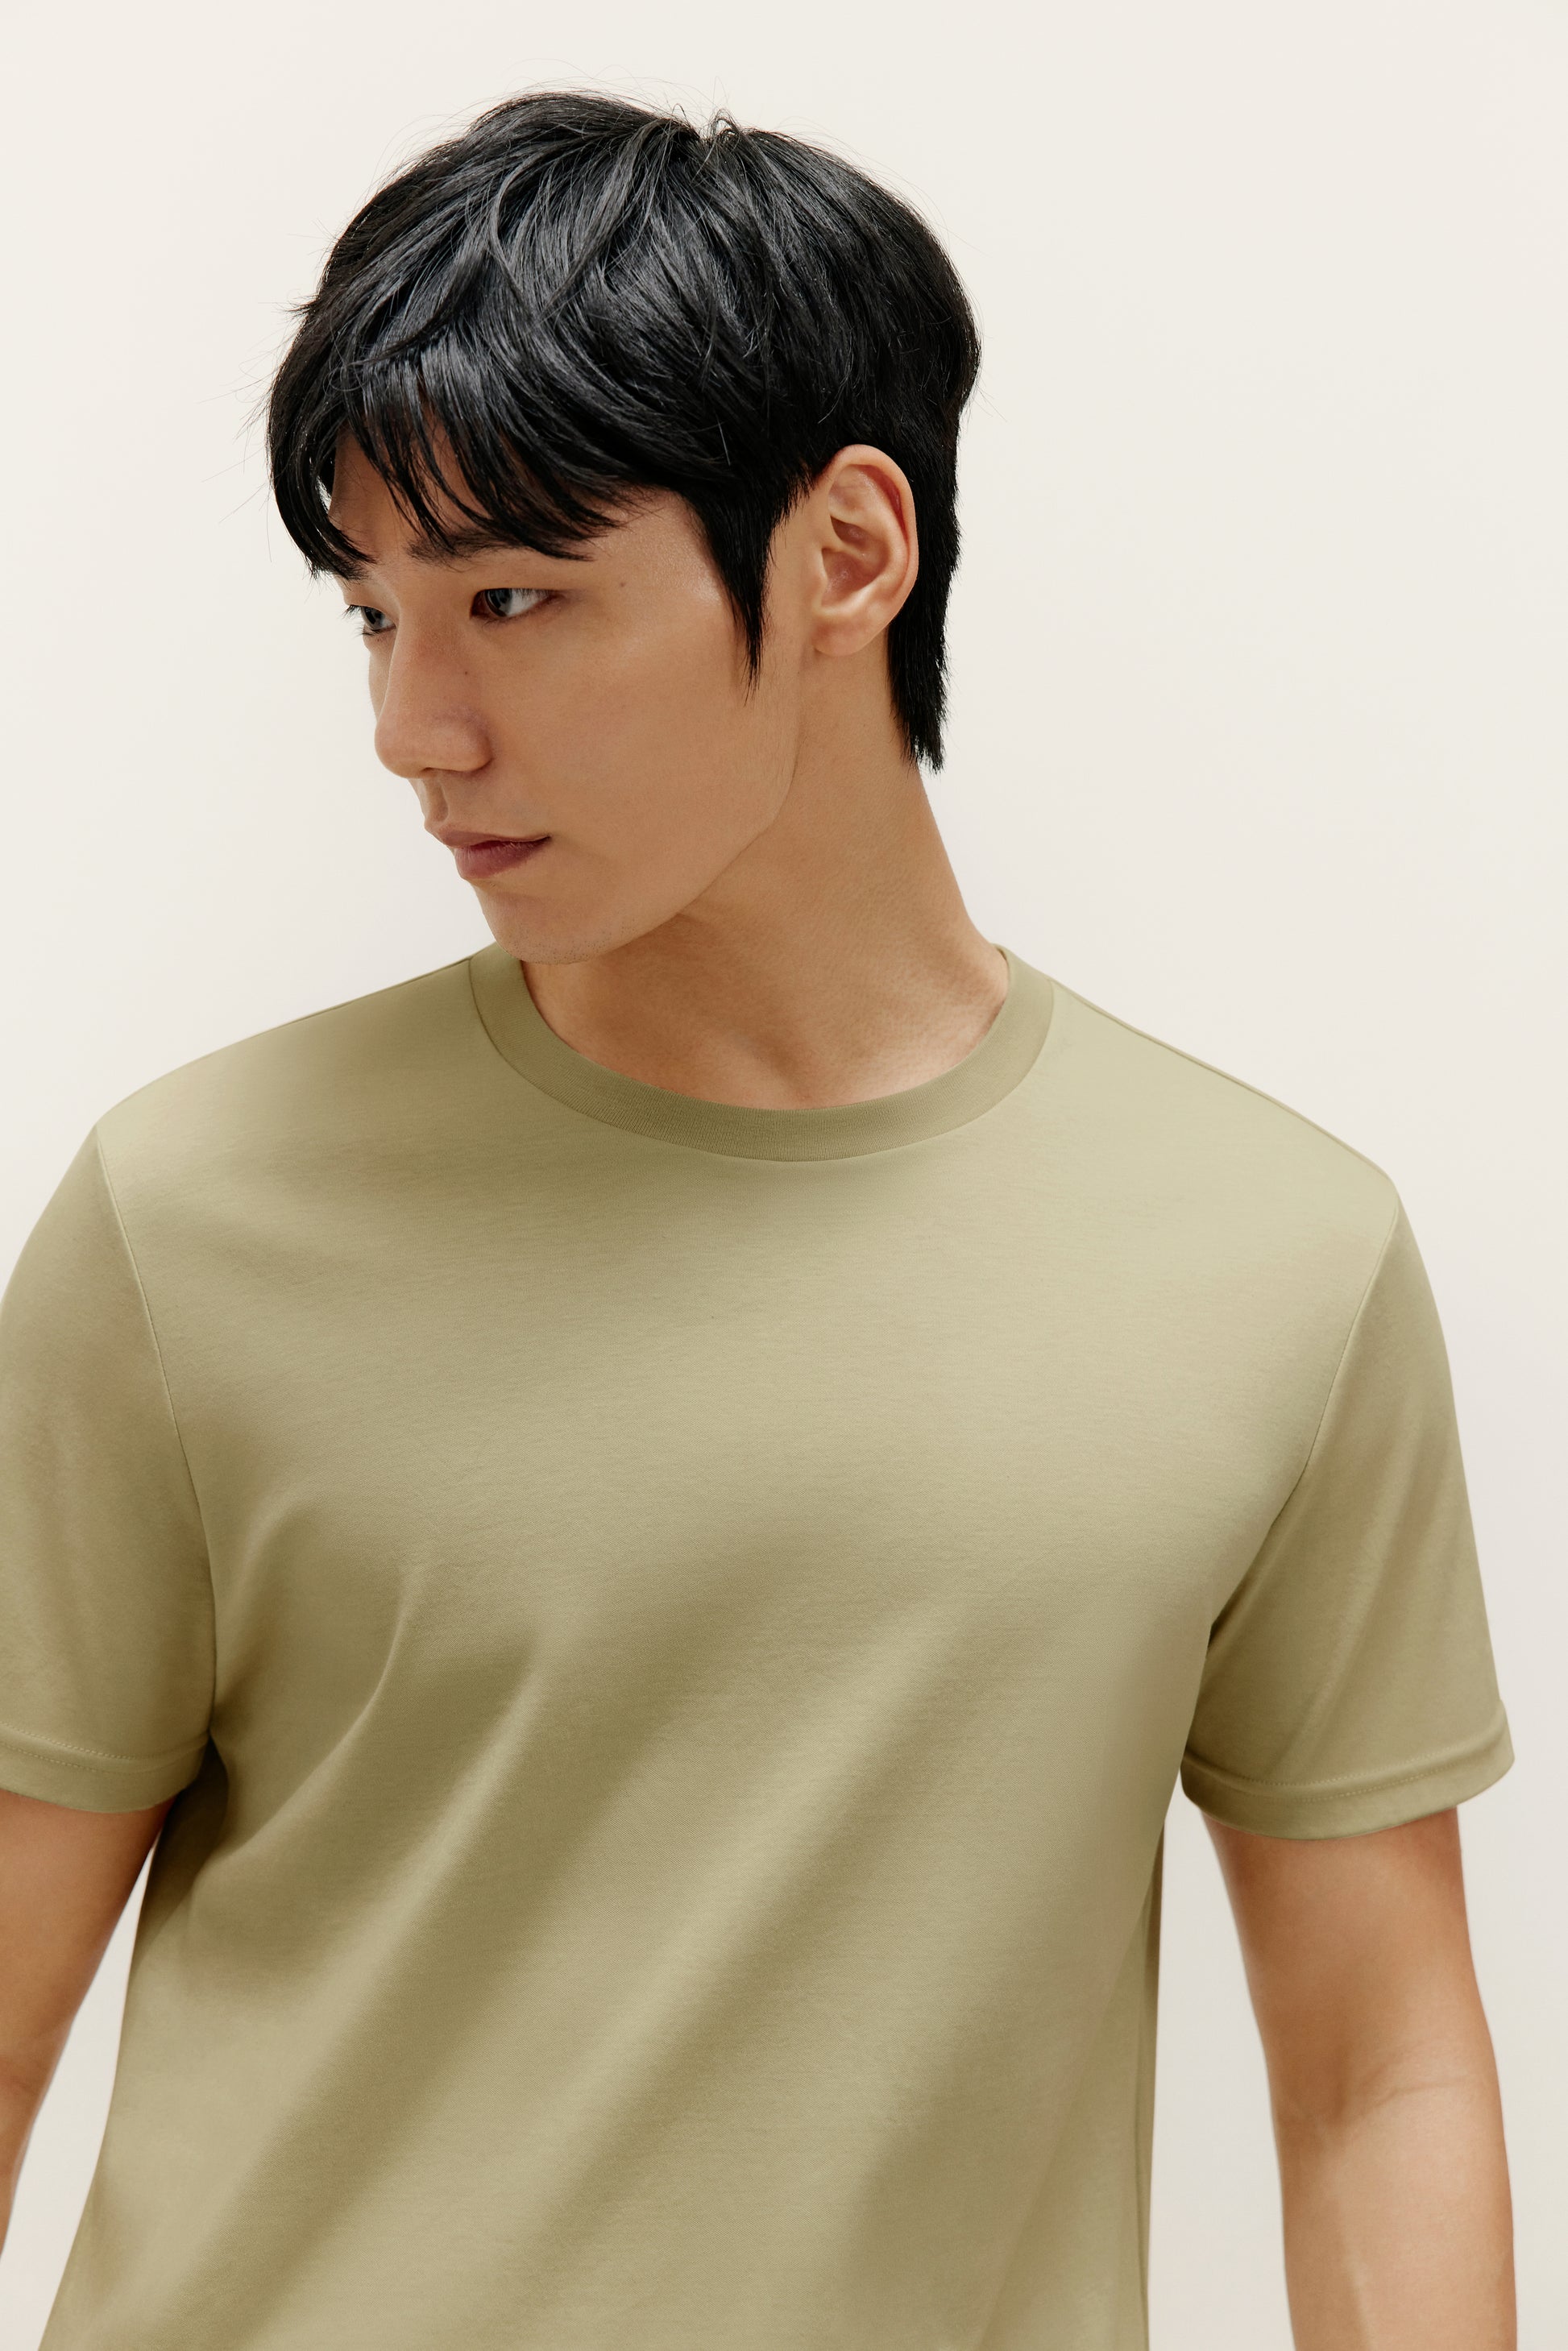 a man wearing green t shirt